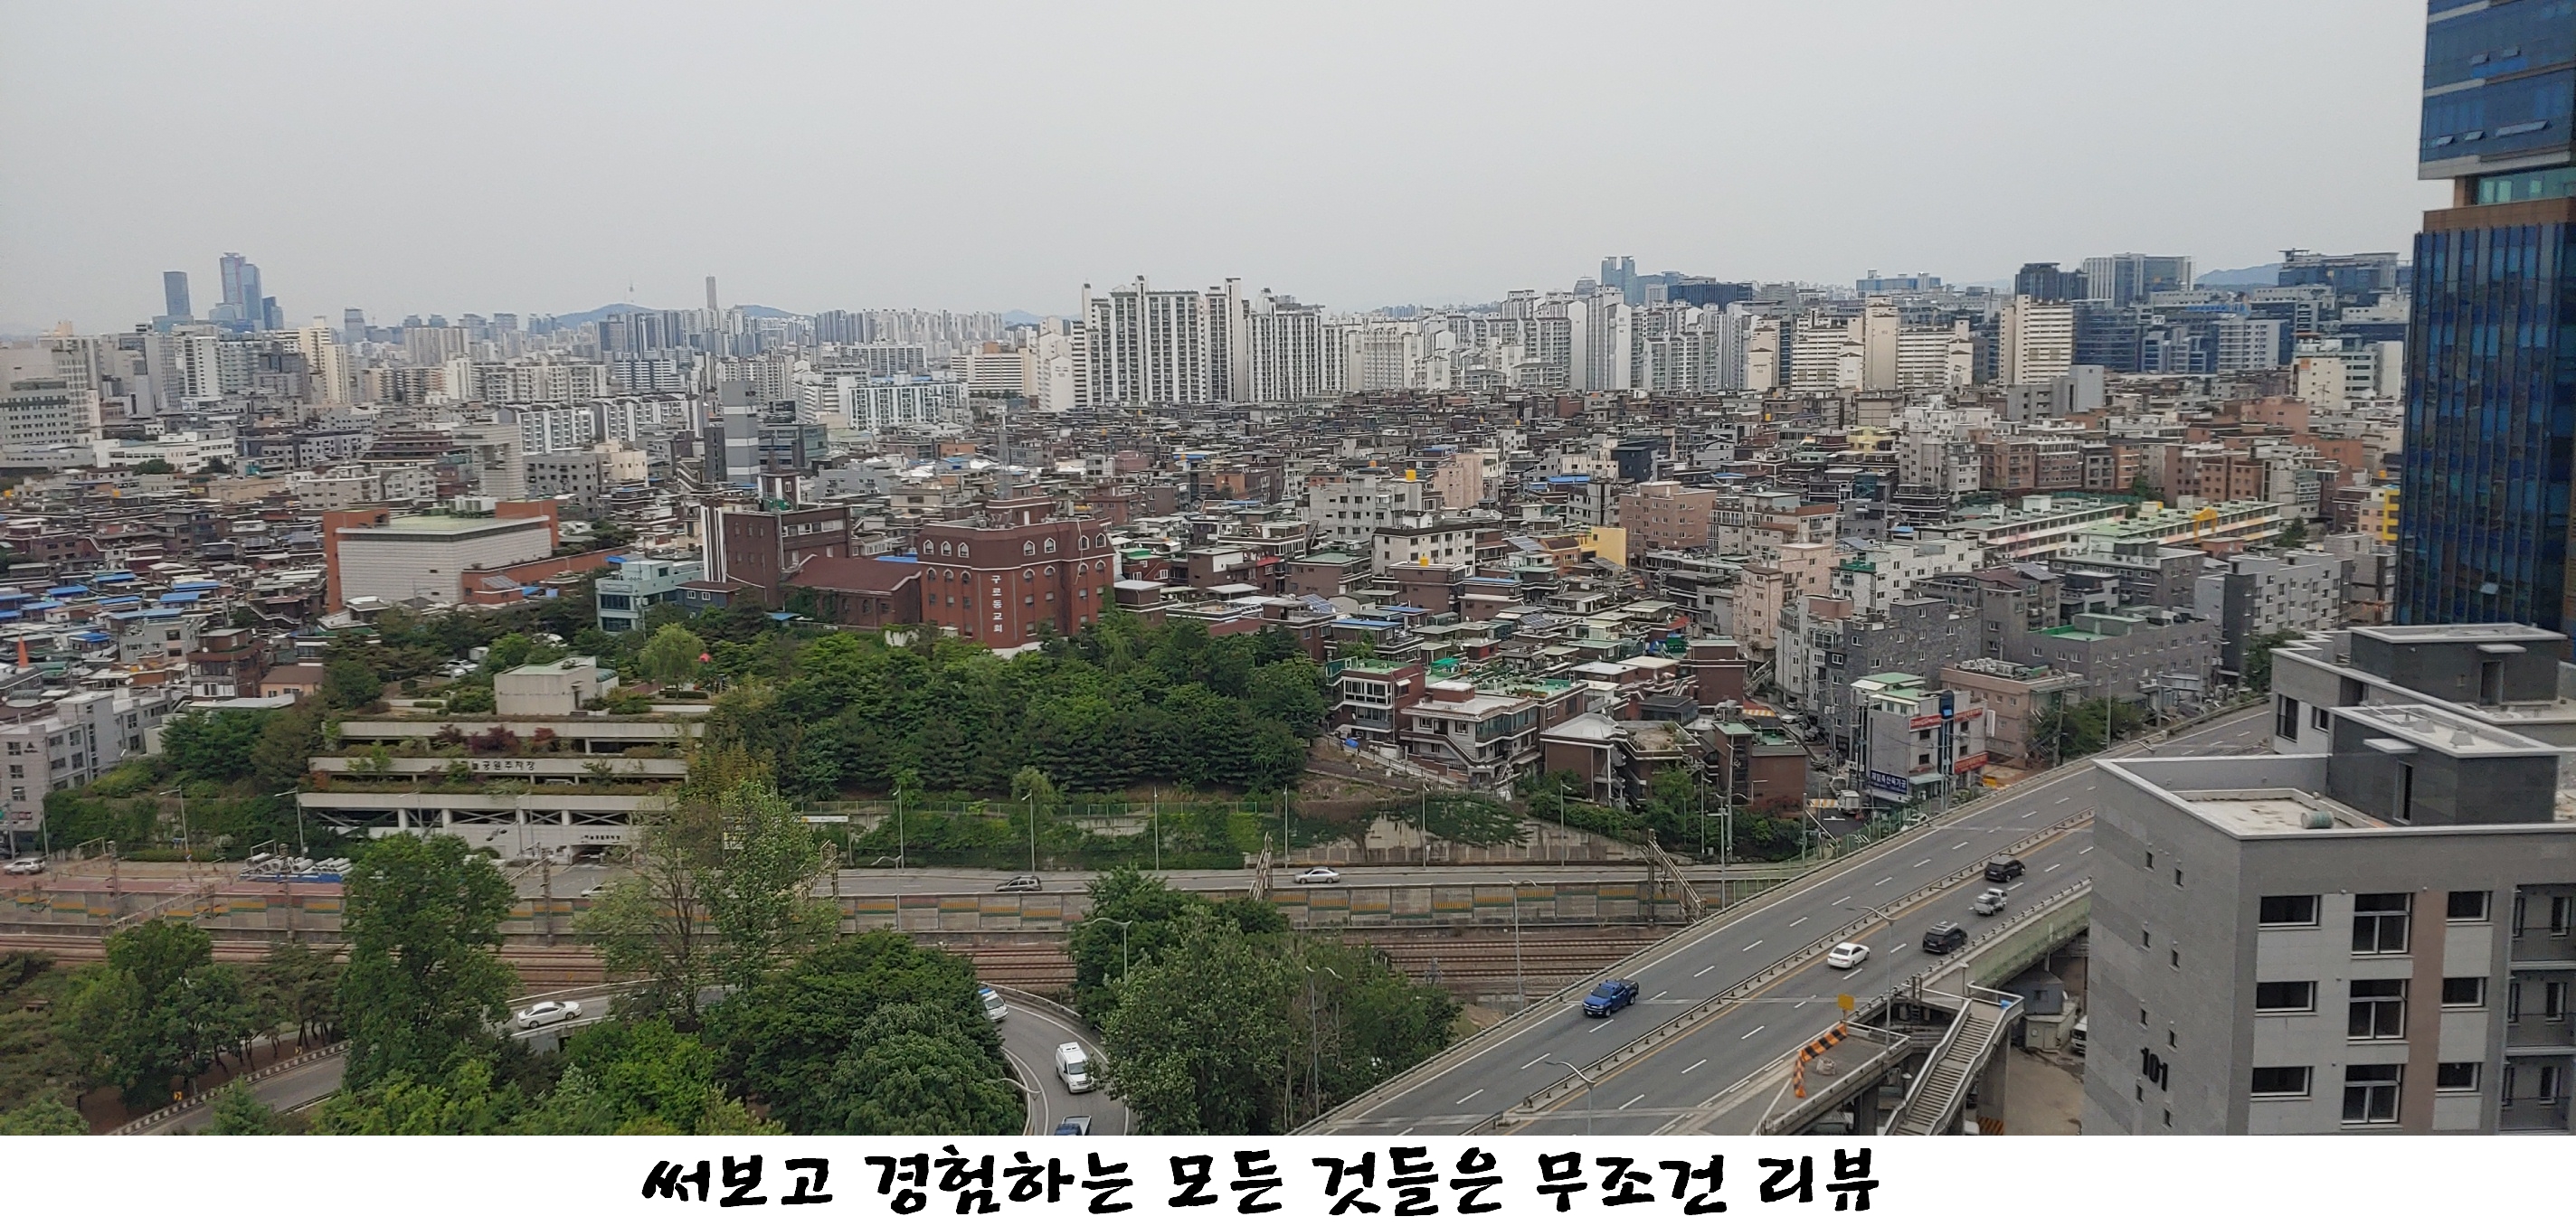 220525&#44; Seoul&#44; 사진&#44; 서울&#44; 풍경&#44; 하늘